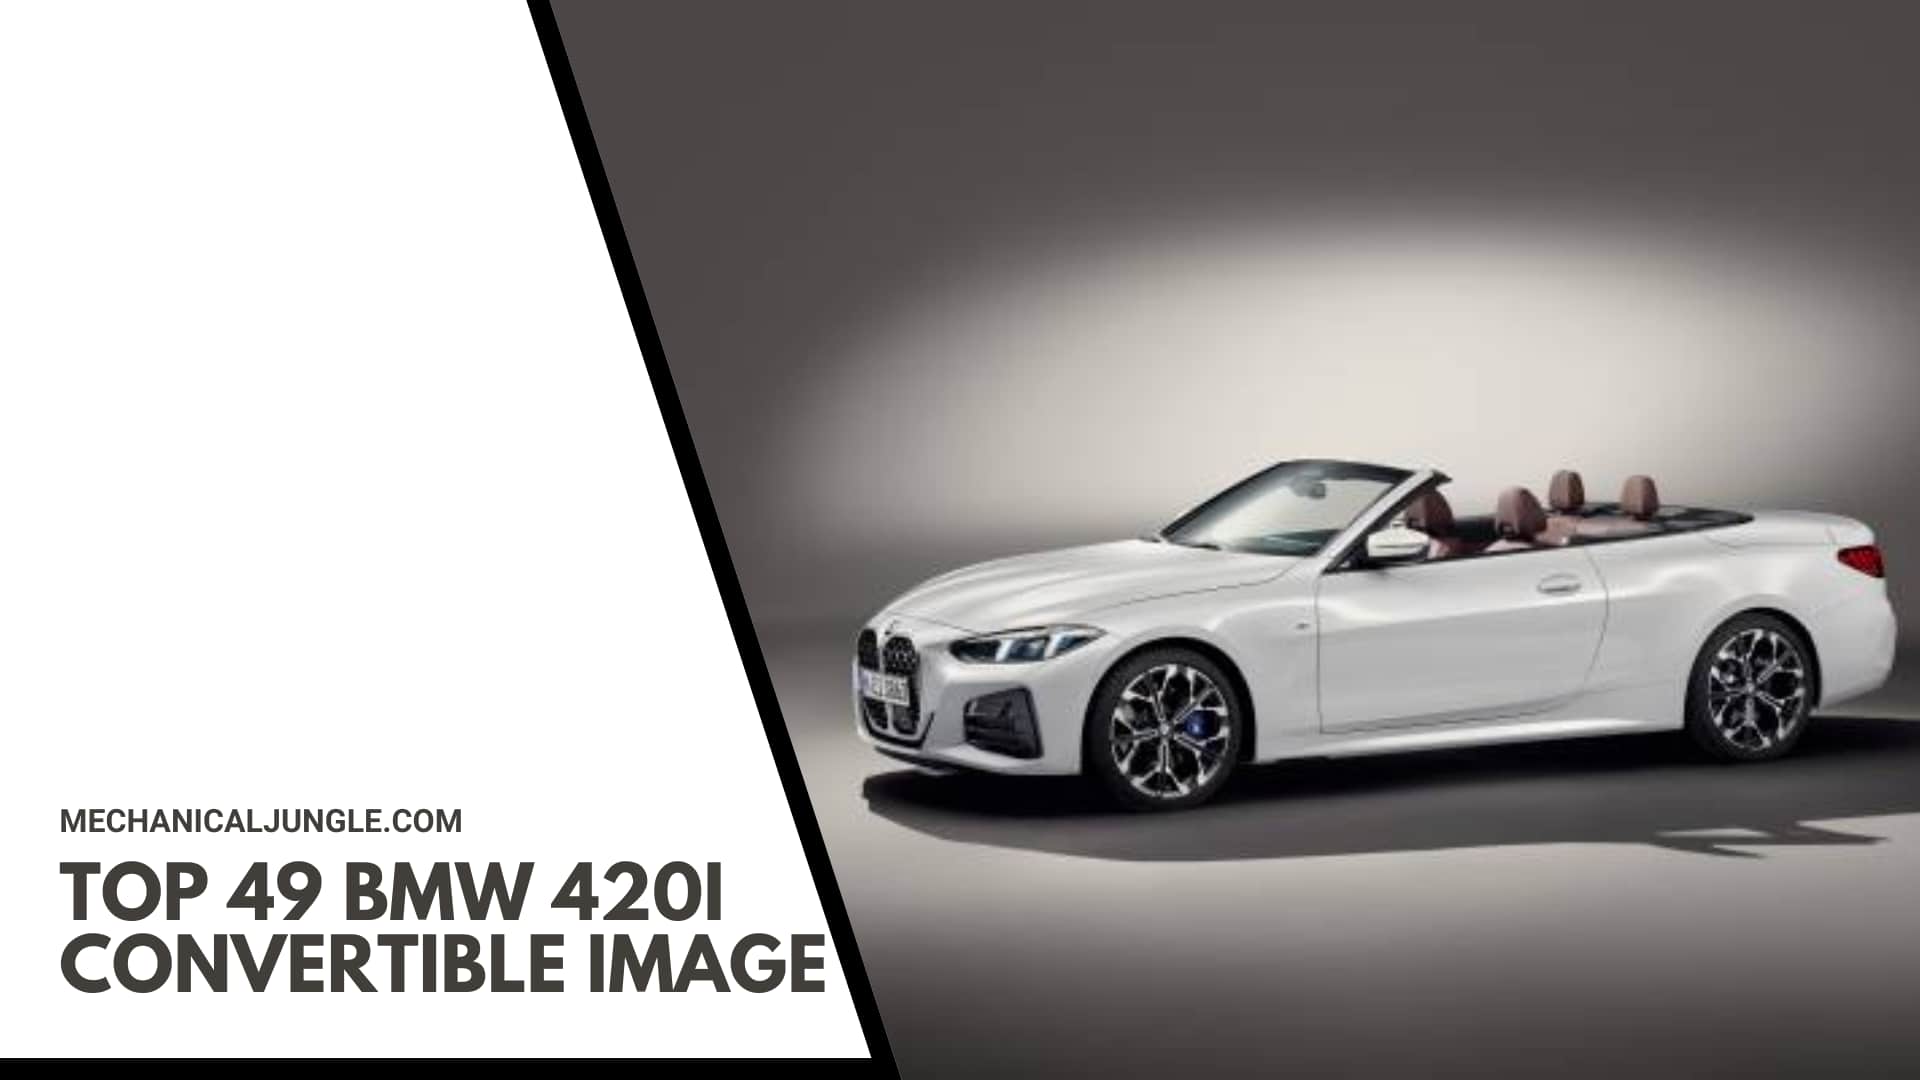 Top 49 BMW 420i Convertible Image